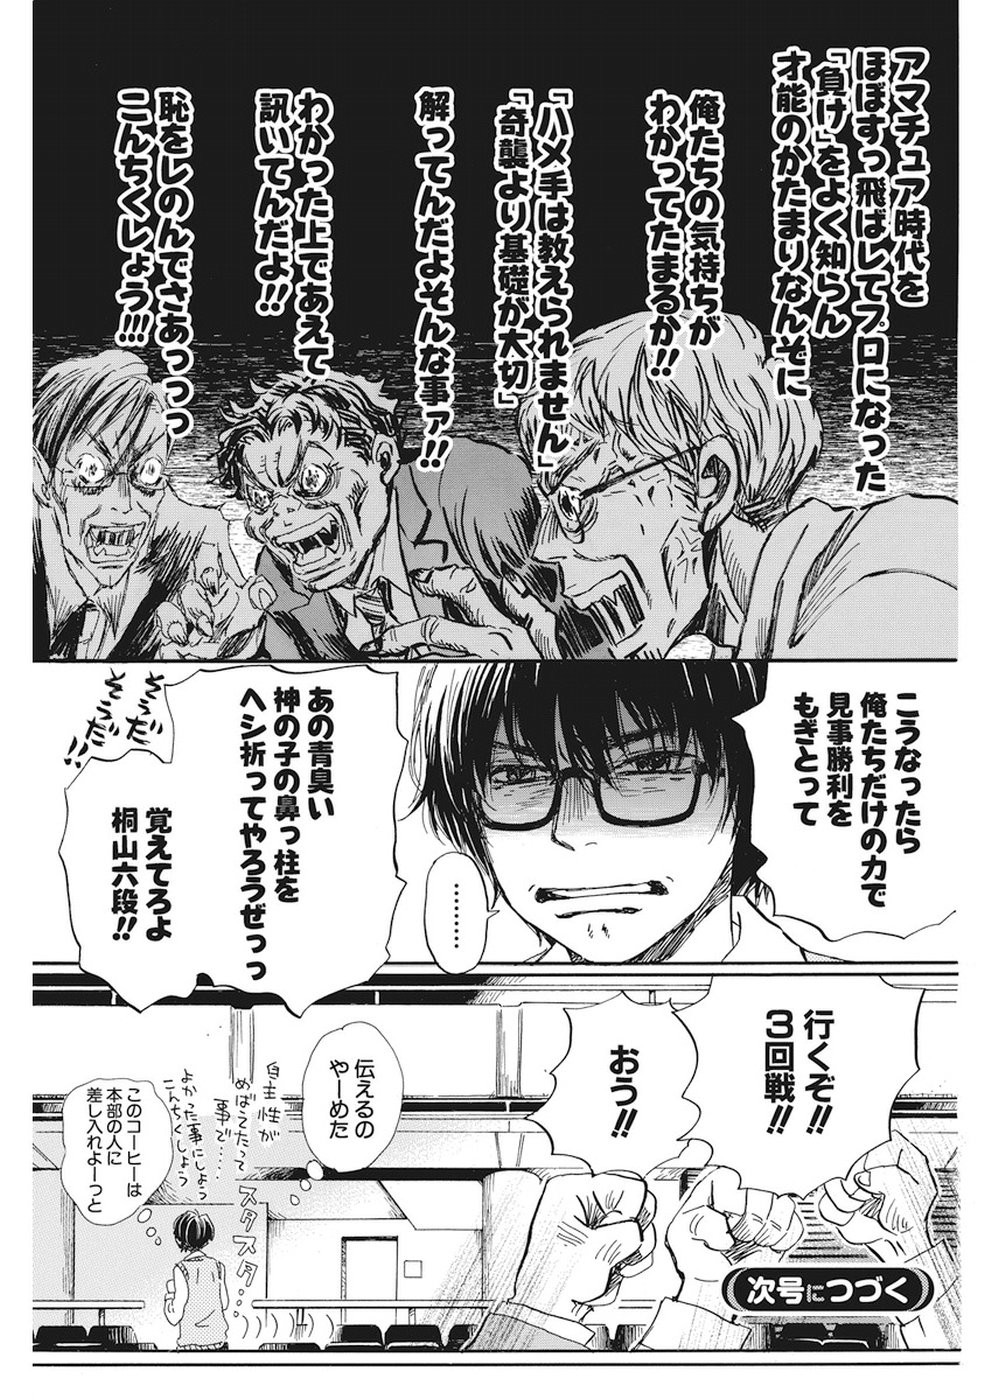 3 Gatsu no Lion - Chapter 150 - Page 11